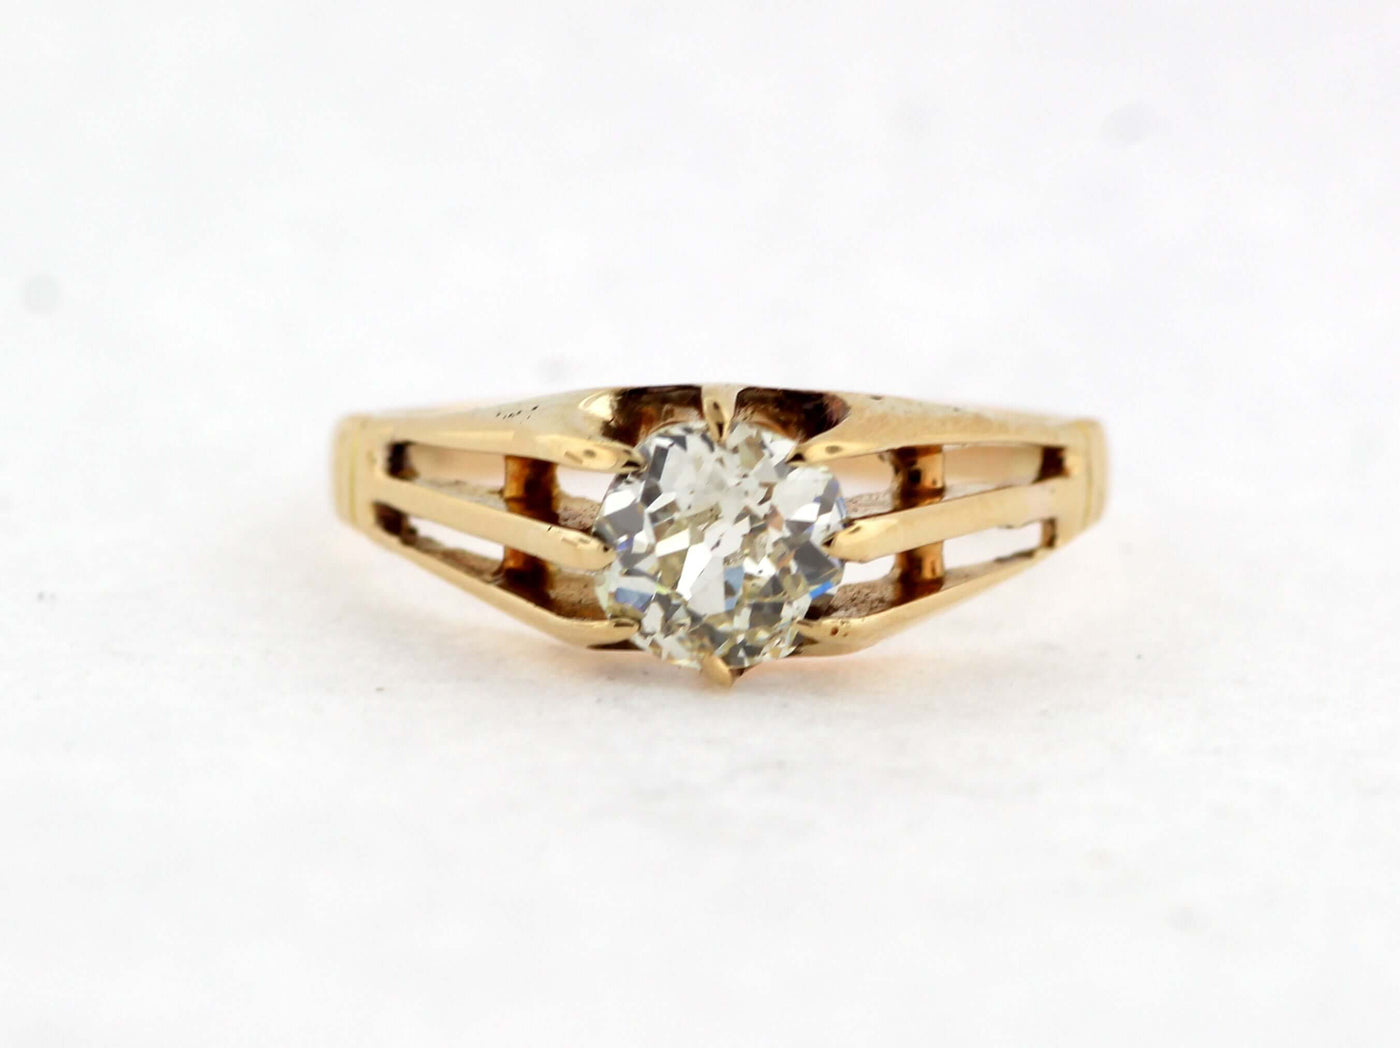 14KY .85 CT OLD MINE CUT DIAMOND RING J-SI1 N1393 estate ring has por image